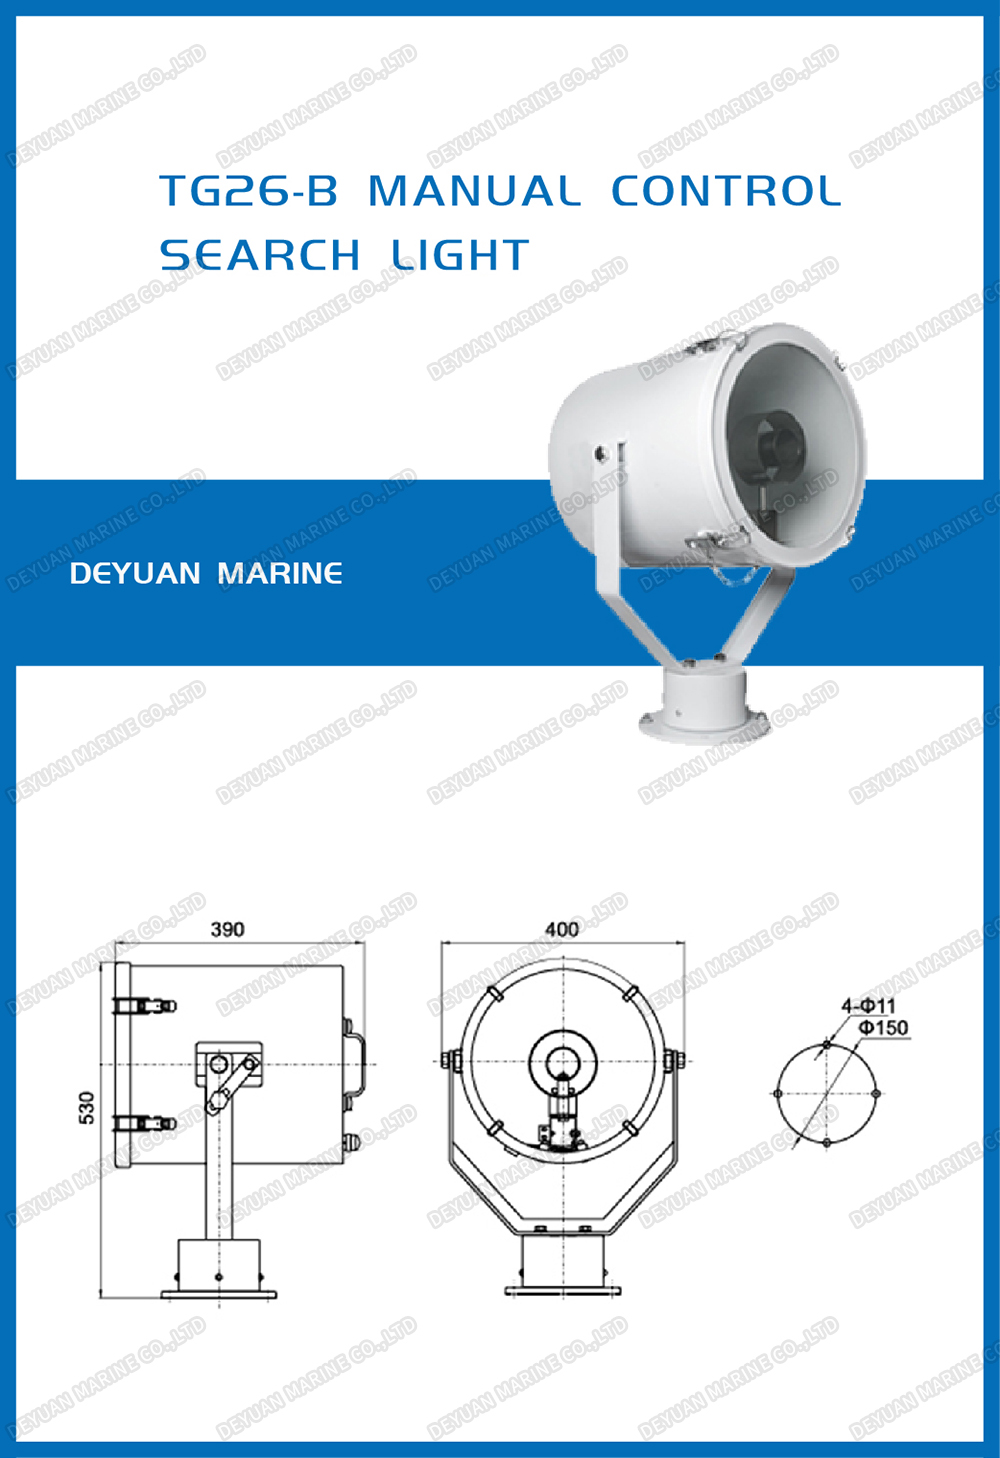 Search Light TG26-B for lighting